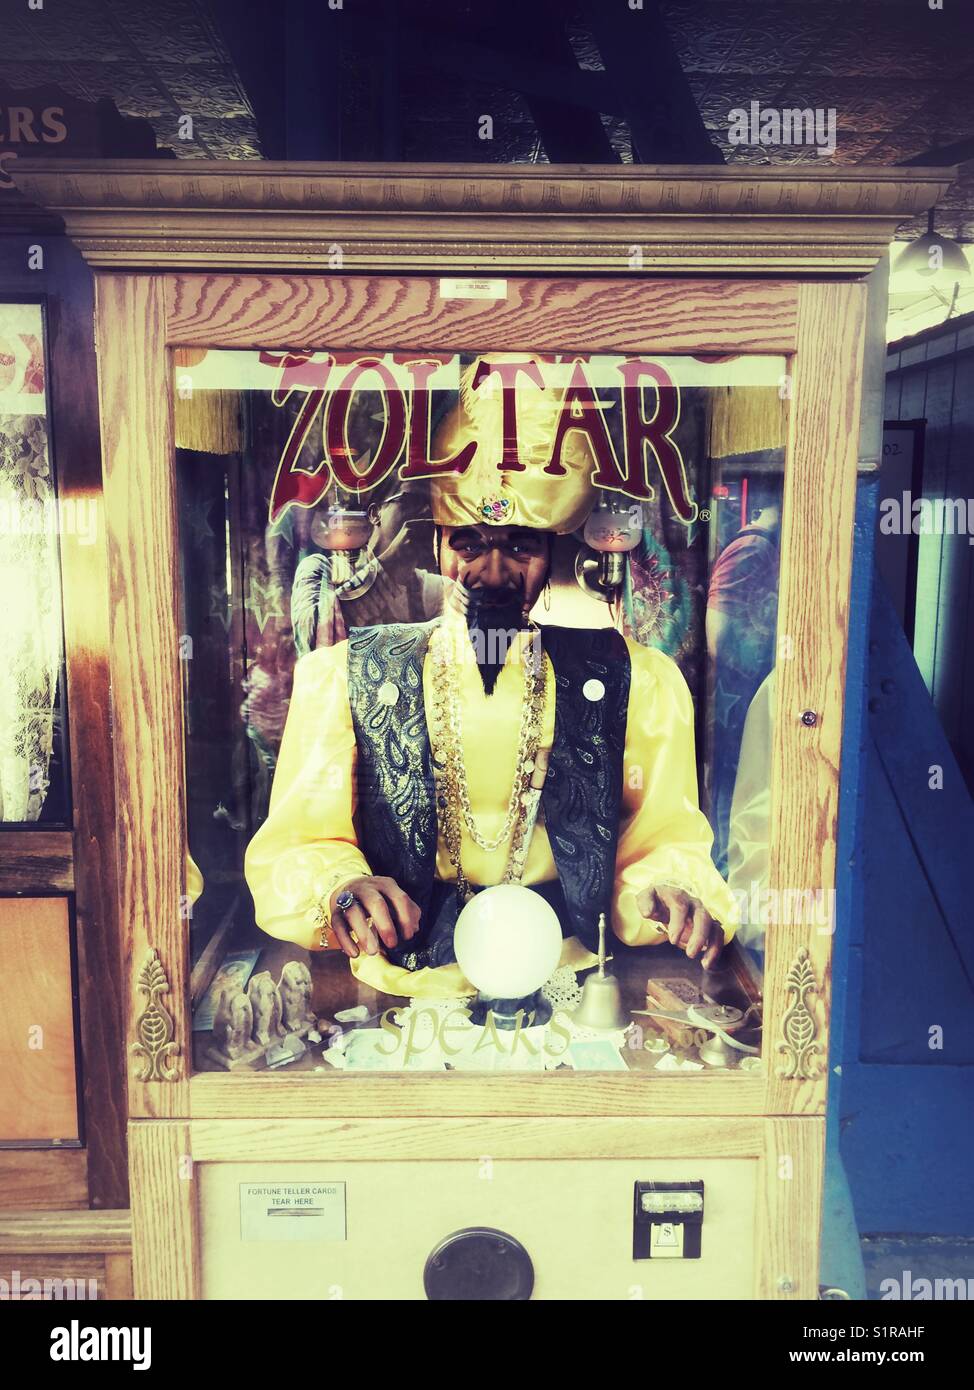 Zoltar fortune telling arcade machine, Coney Island, Brooklyn, New York, United States of America. Stock Photo